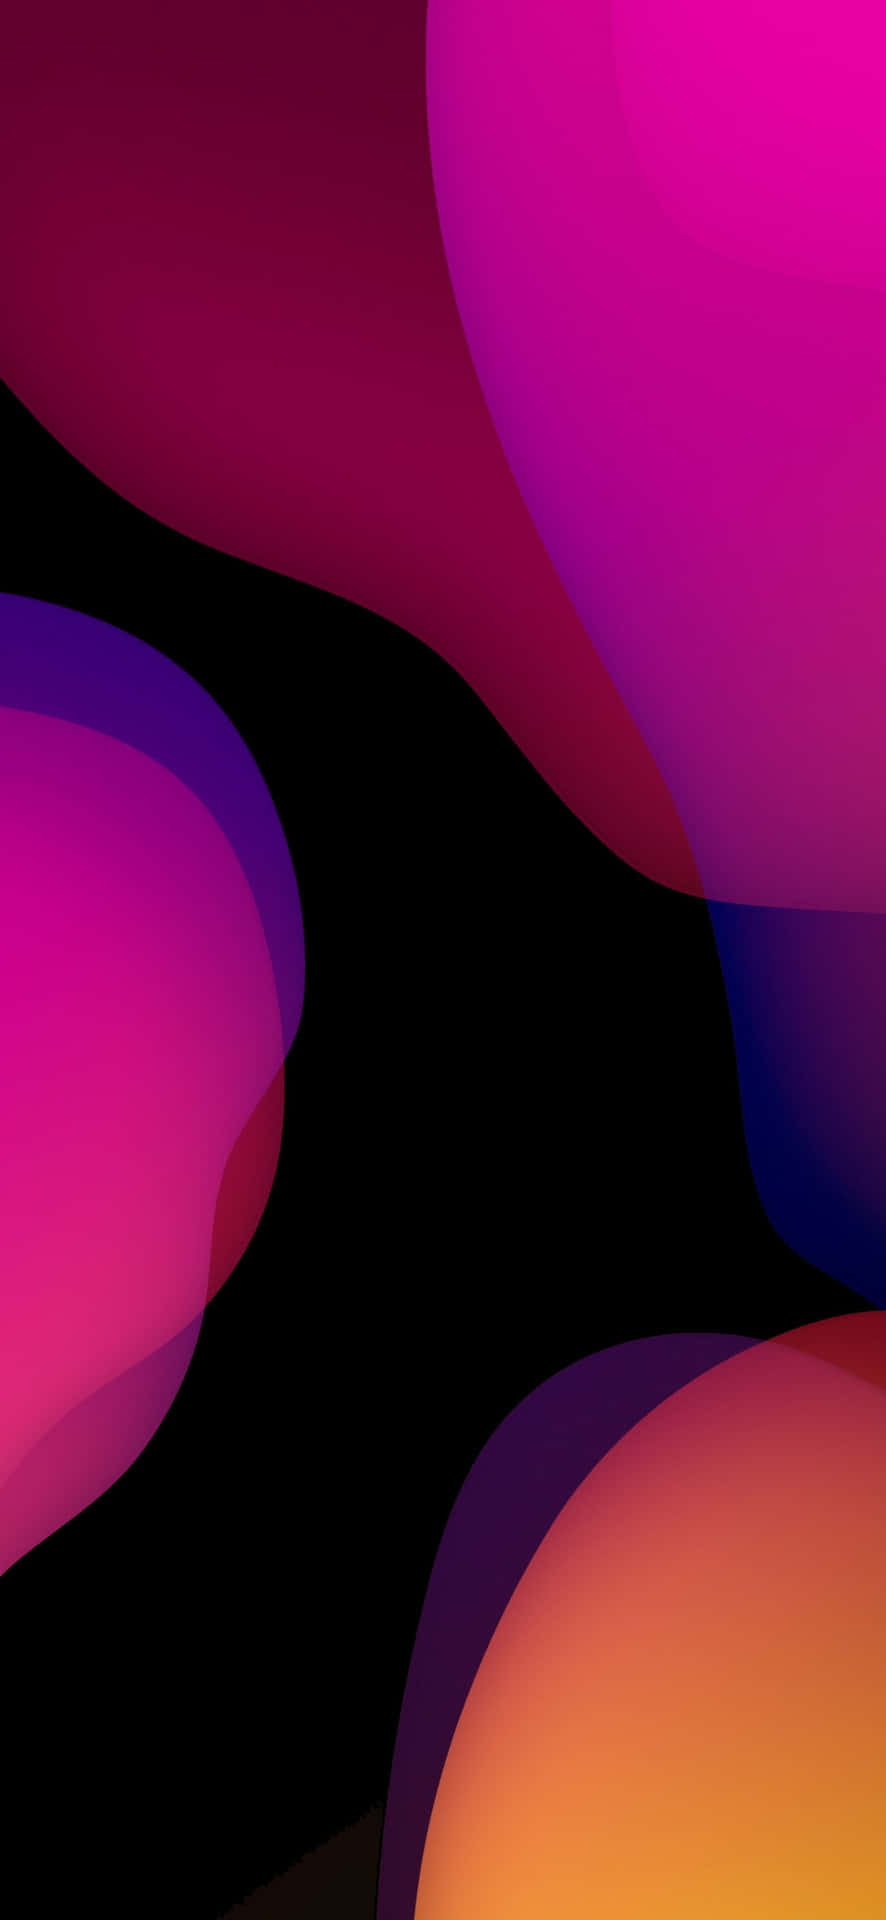 IOS 1 Purple og Red Bubbles. Wallpaper